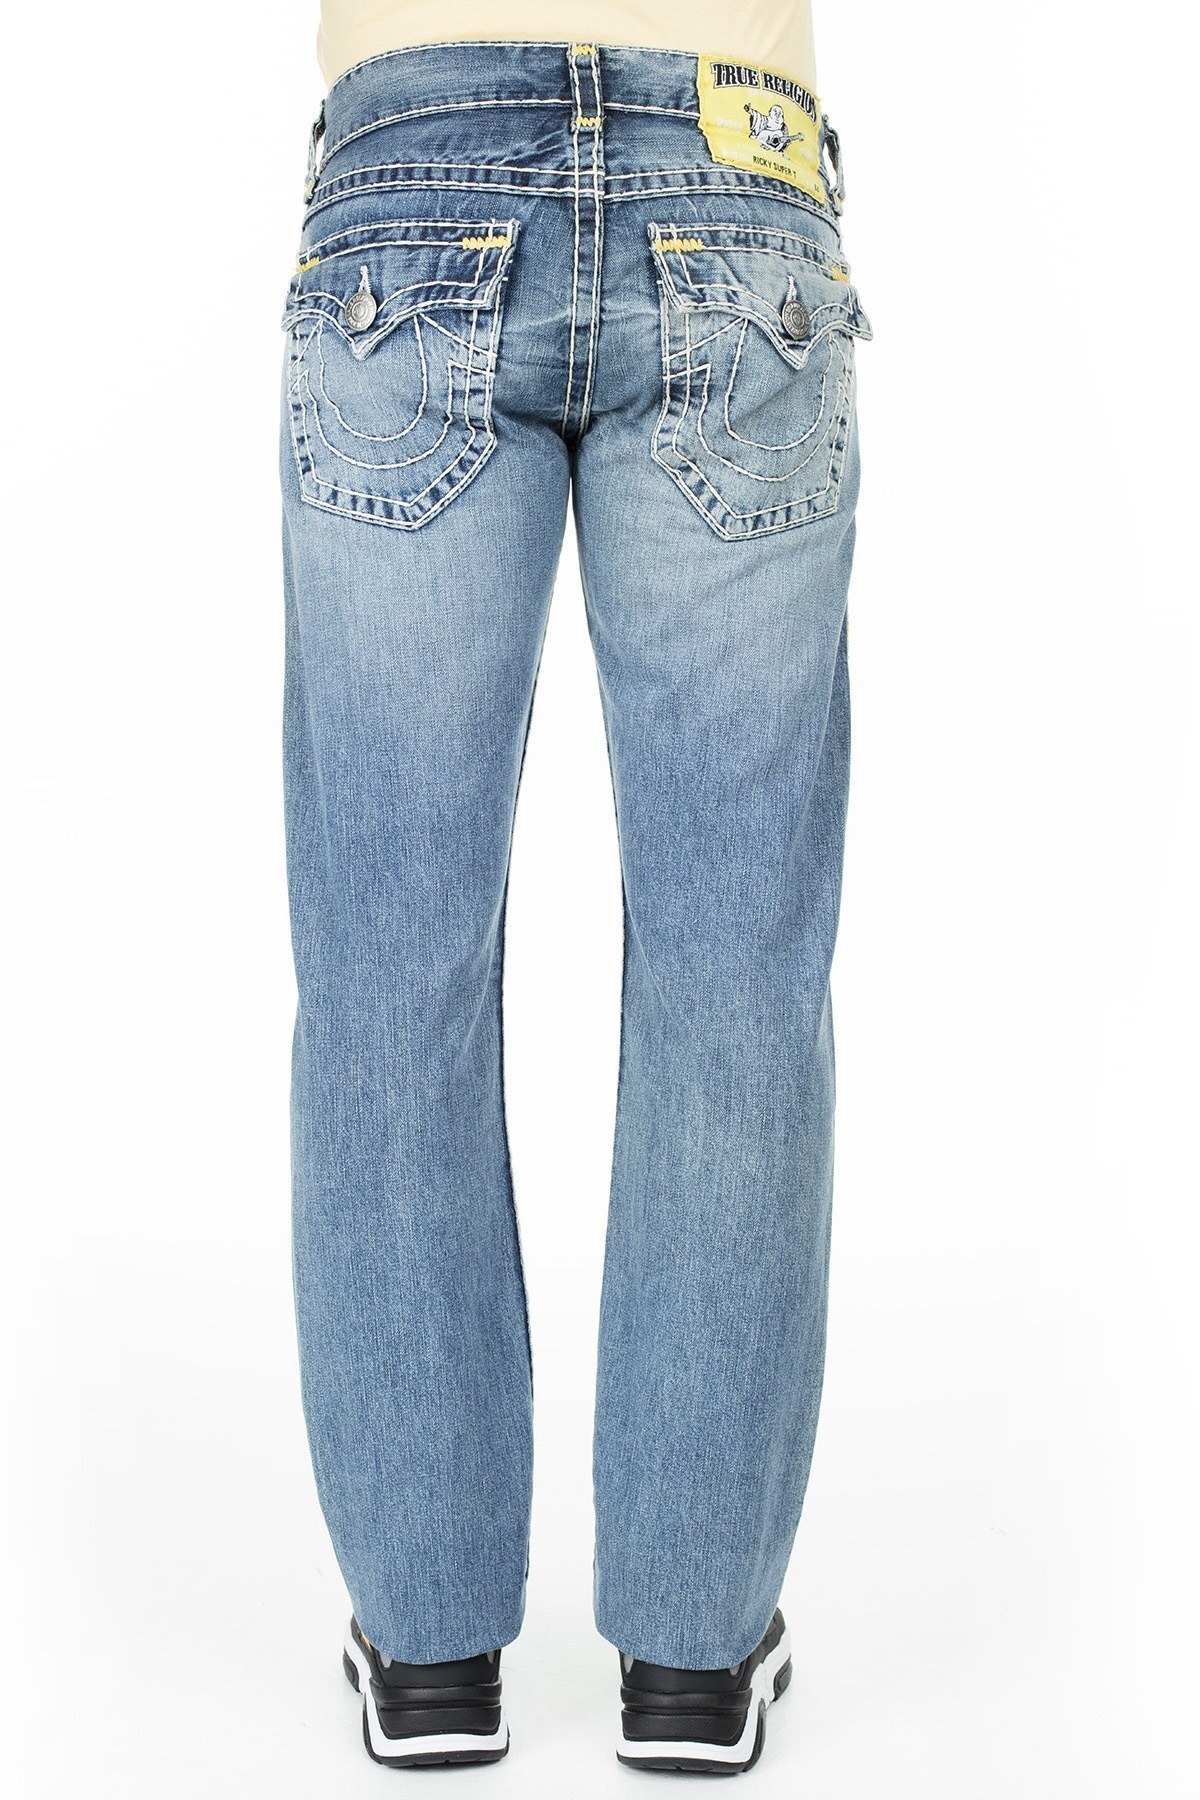 True Religion Jeans Erkek Kot Pantolon M24859BB0 LACİVERT